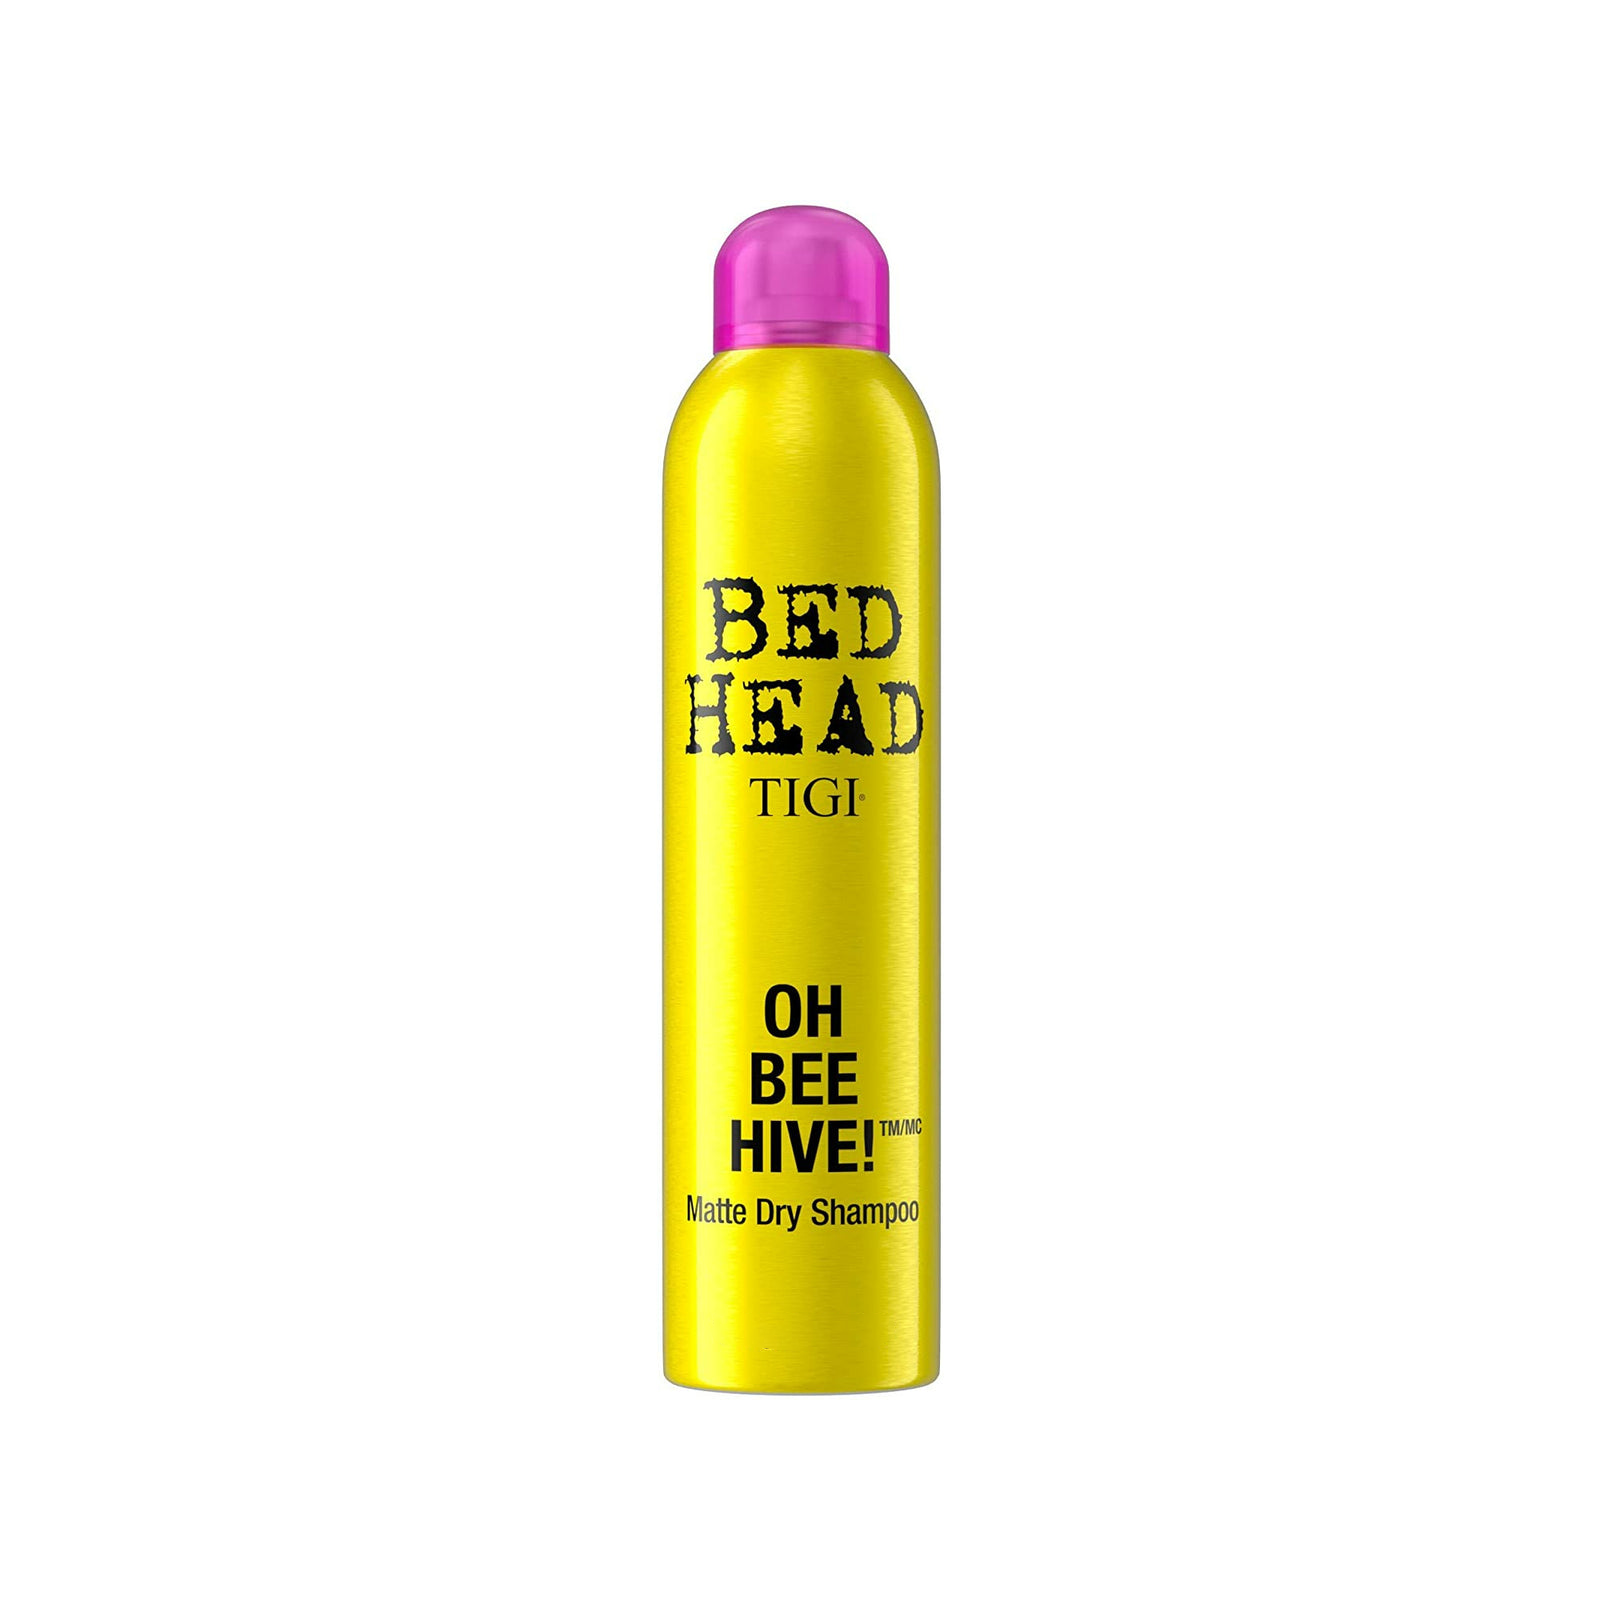 Tigi Bed Head Oh Bee Hive Matte Dry Shampoo 5.0 oz / 150 ml New